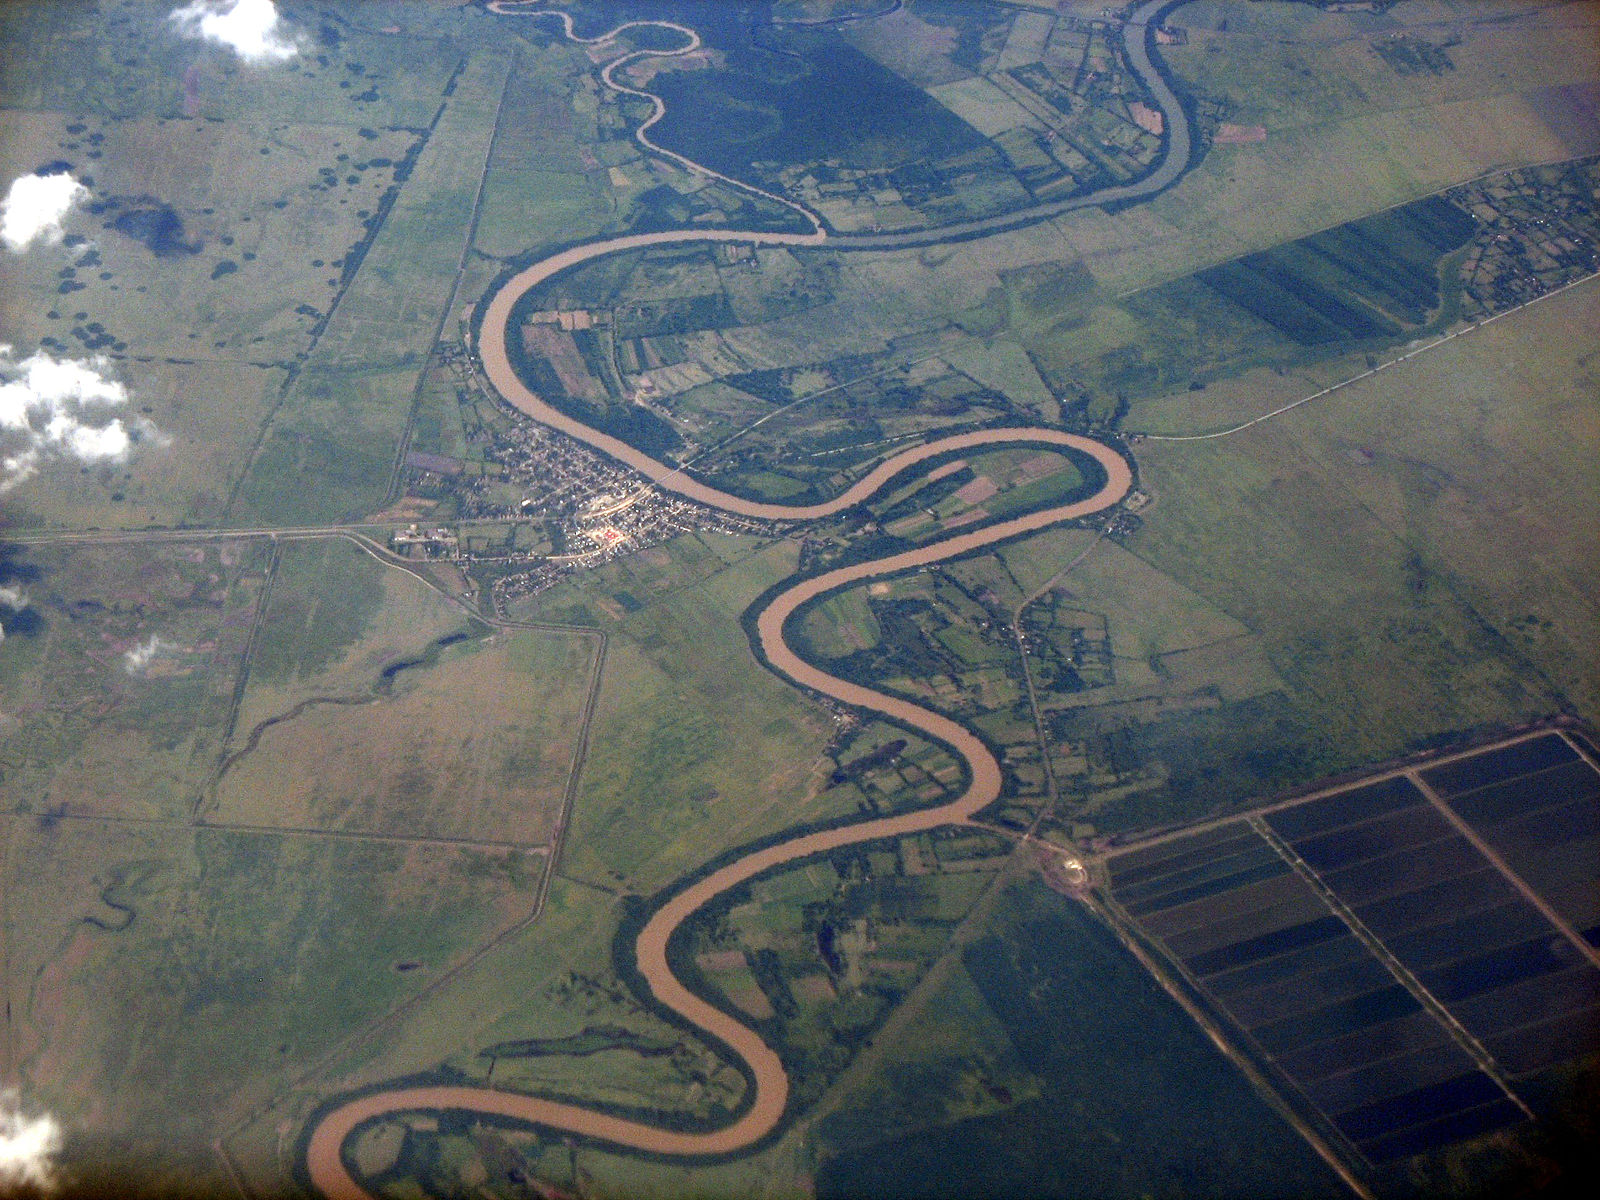 Sinuous tan river running through roughly flat green terrain.